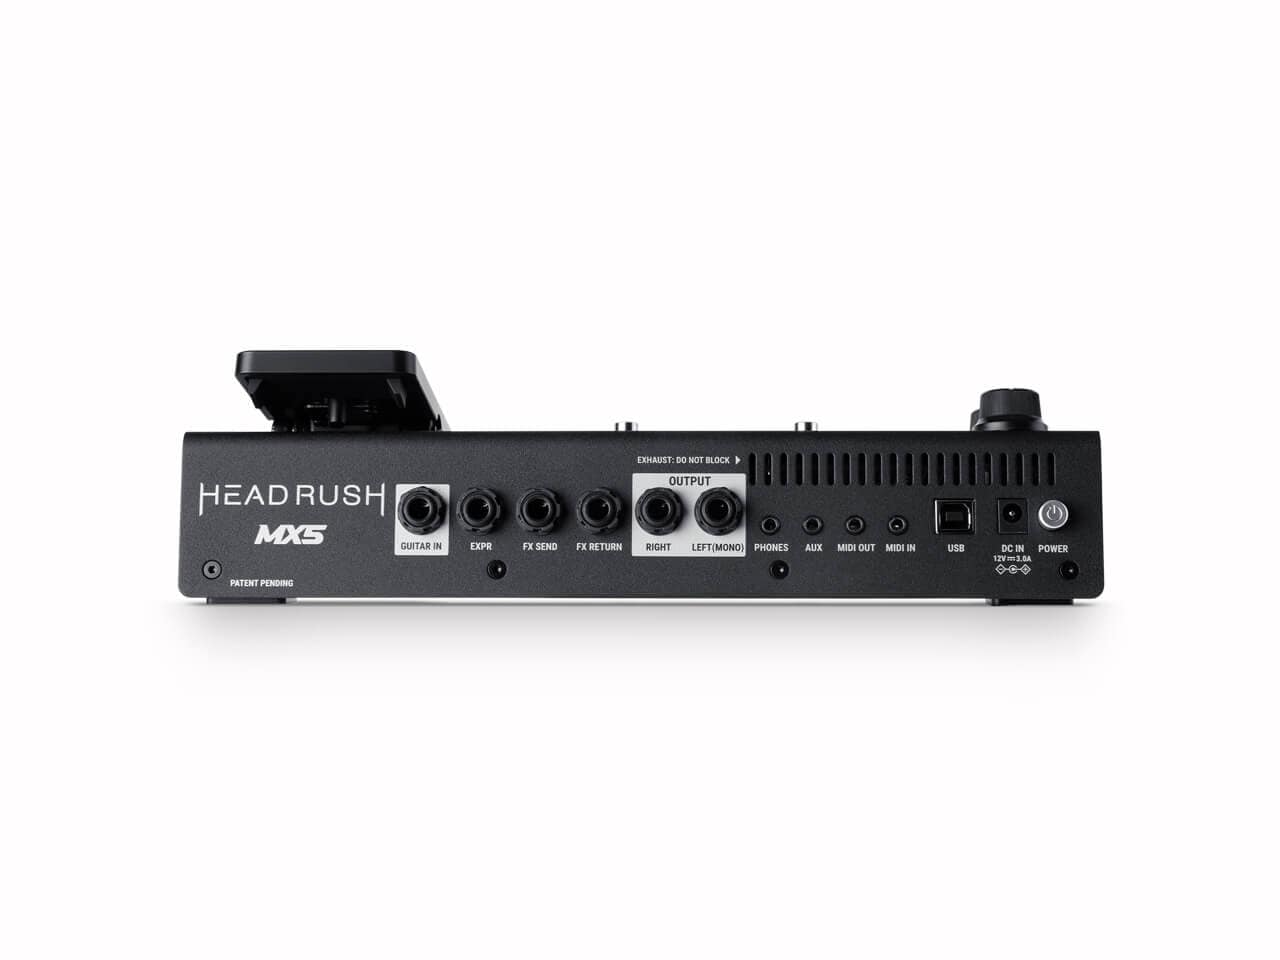 HEADRUSH MX5 マルチエフェクター